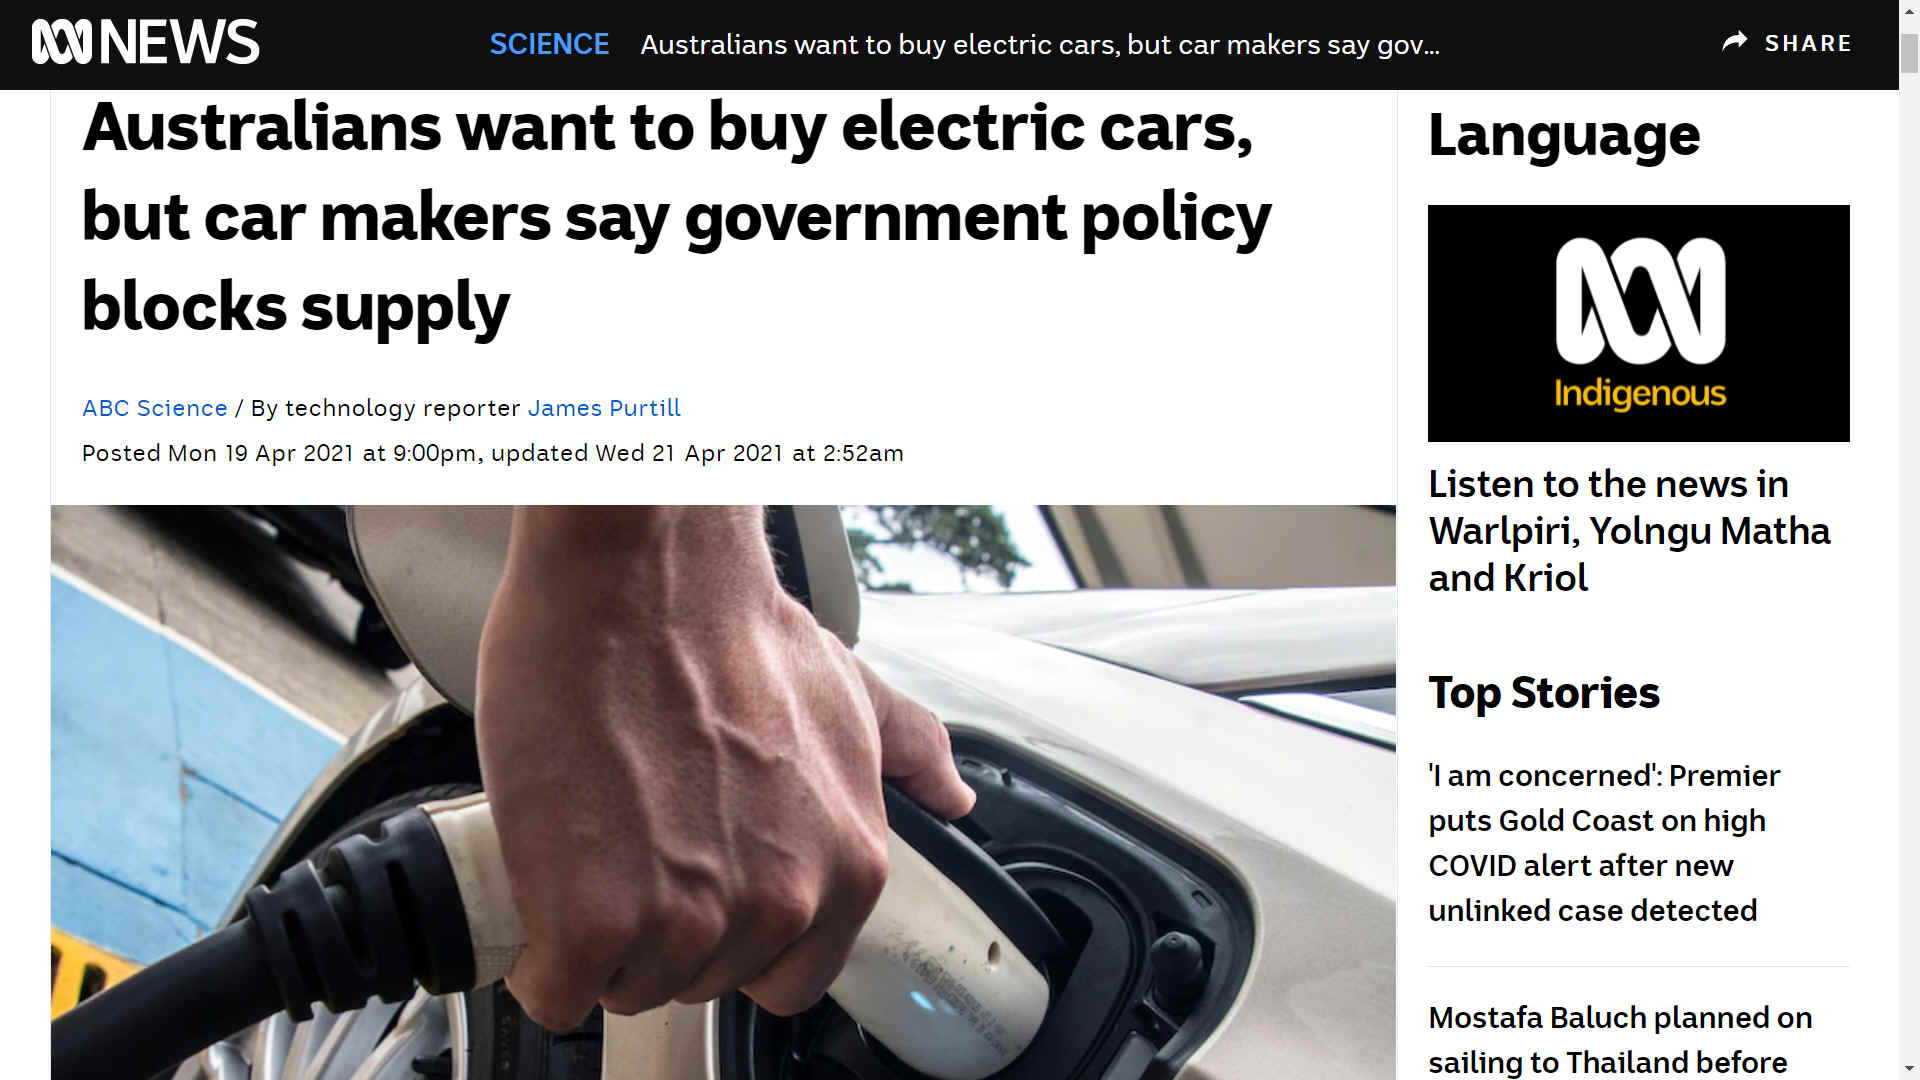 Scott Morrison's Government policies block EV sales